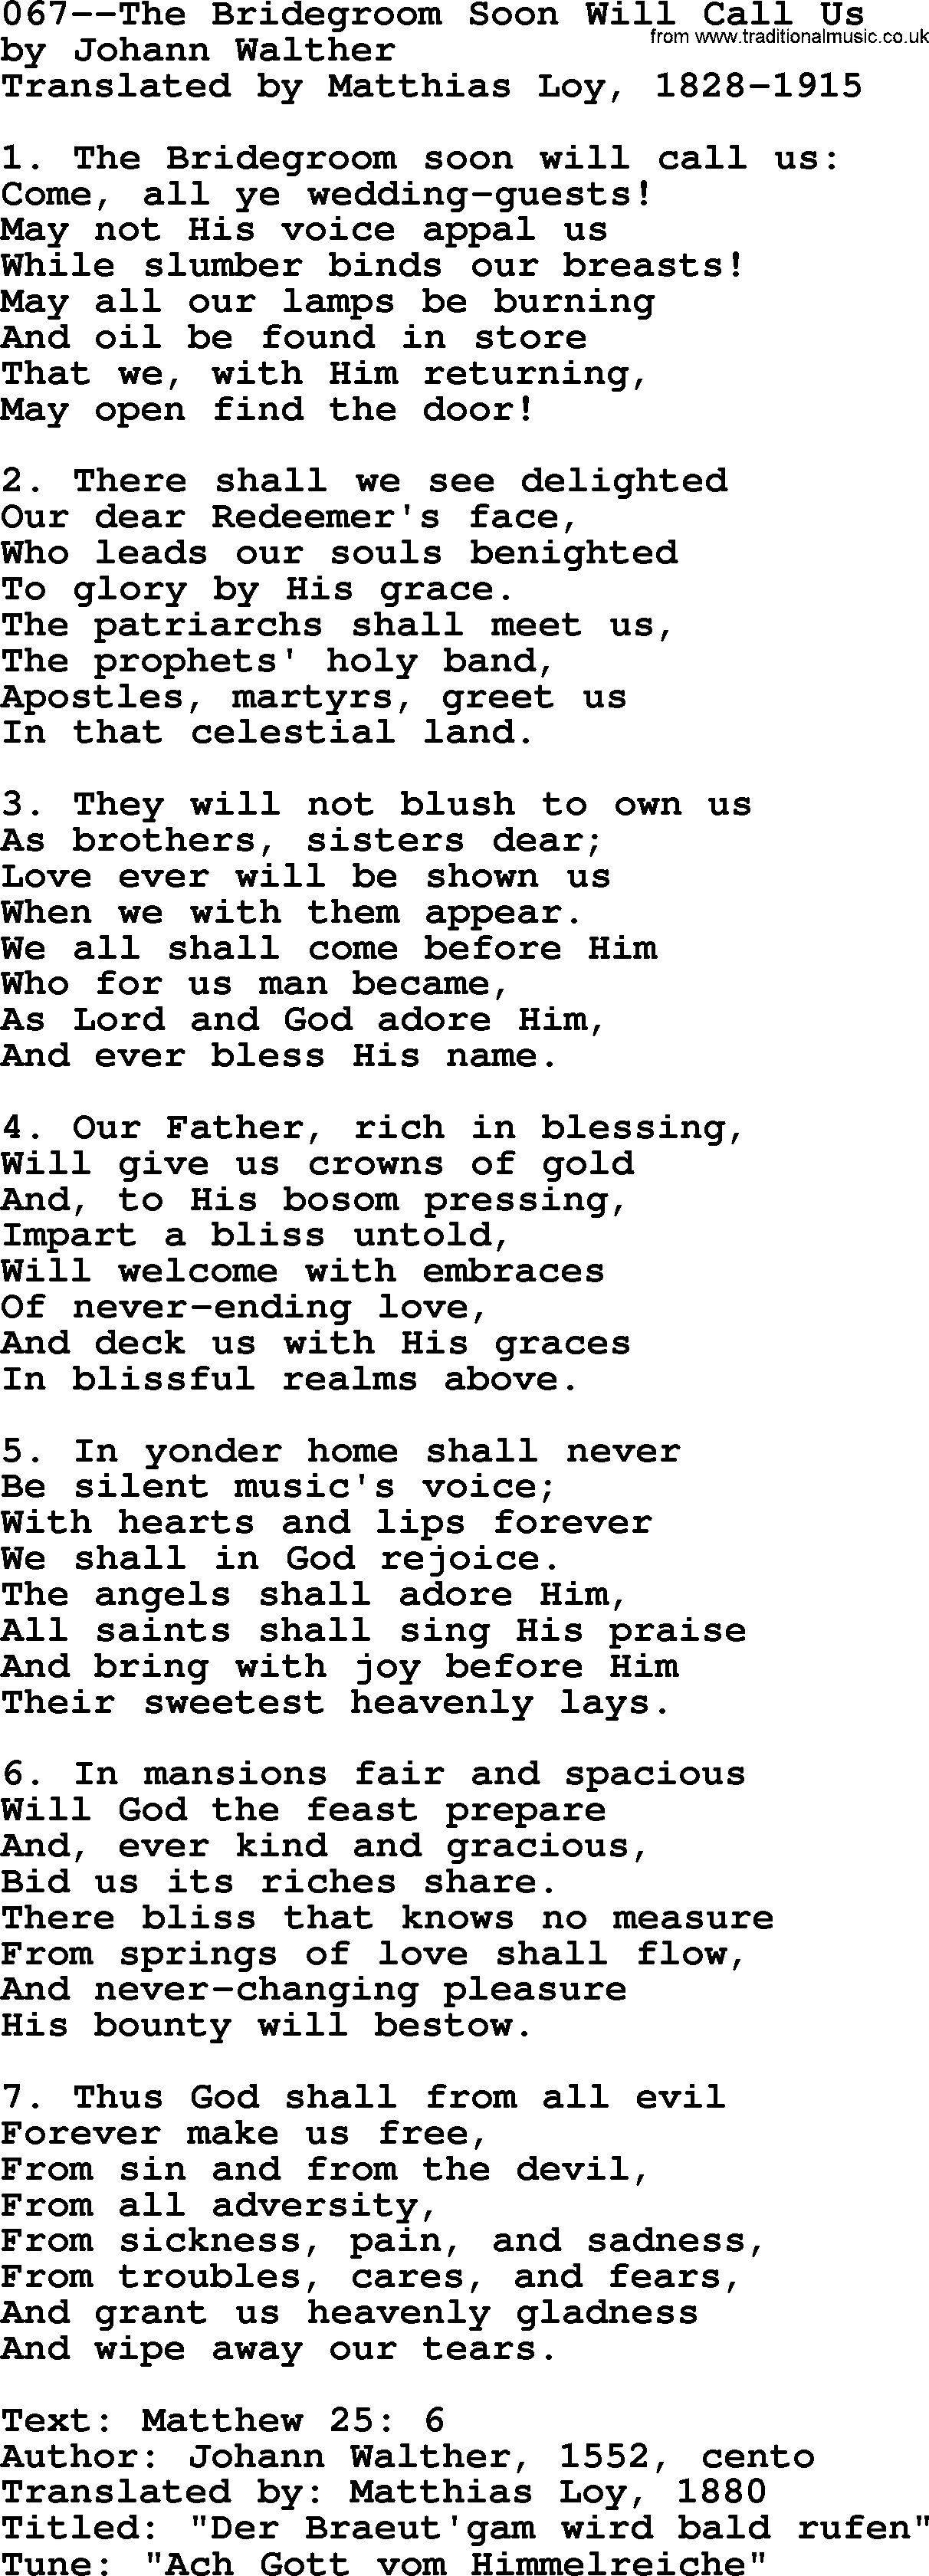 Lutheran Hymn: 067--The Bridegroom Soon Will Call Us.txt lyrics with PDF